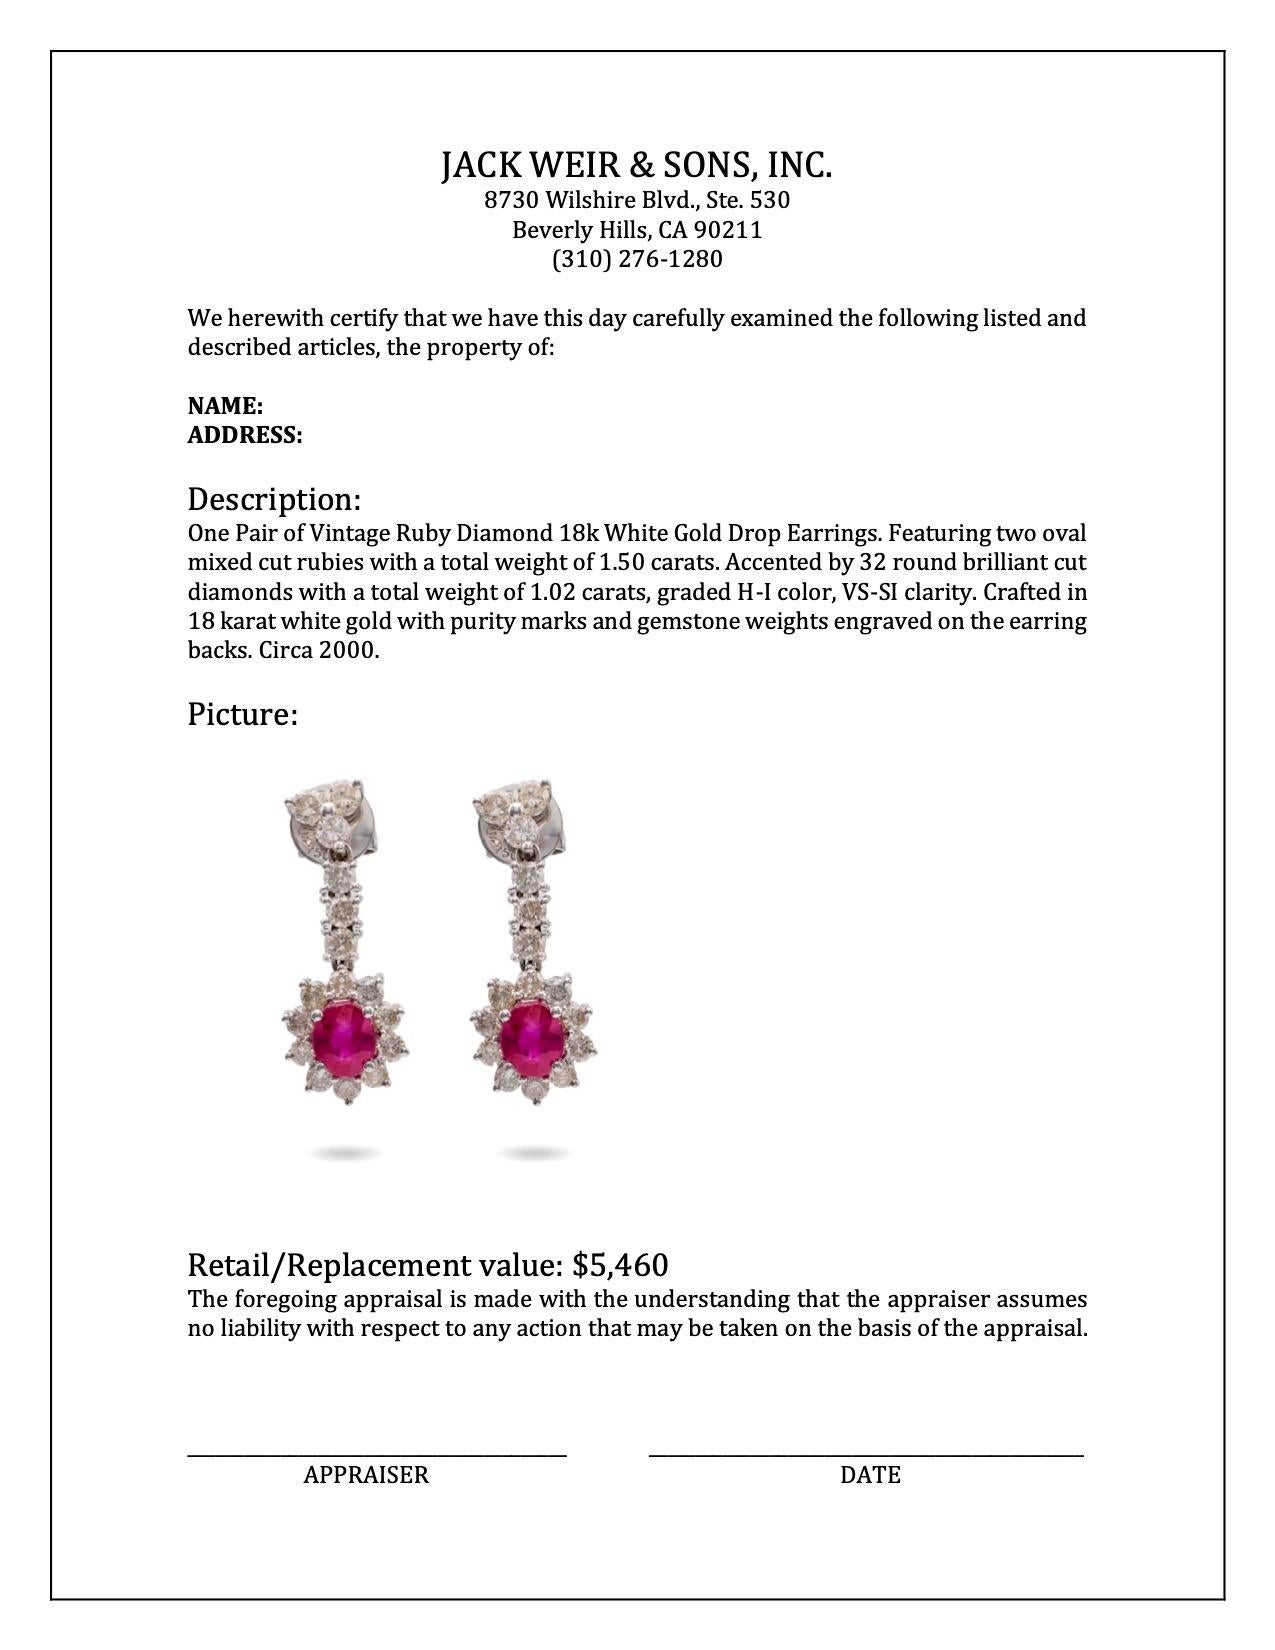 Women's or Men's Pair of Vintage Ruby Diamond 18k White Gold Drop Earrings For Sale